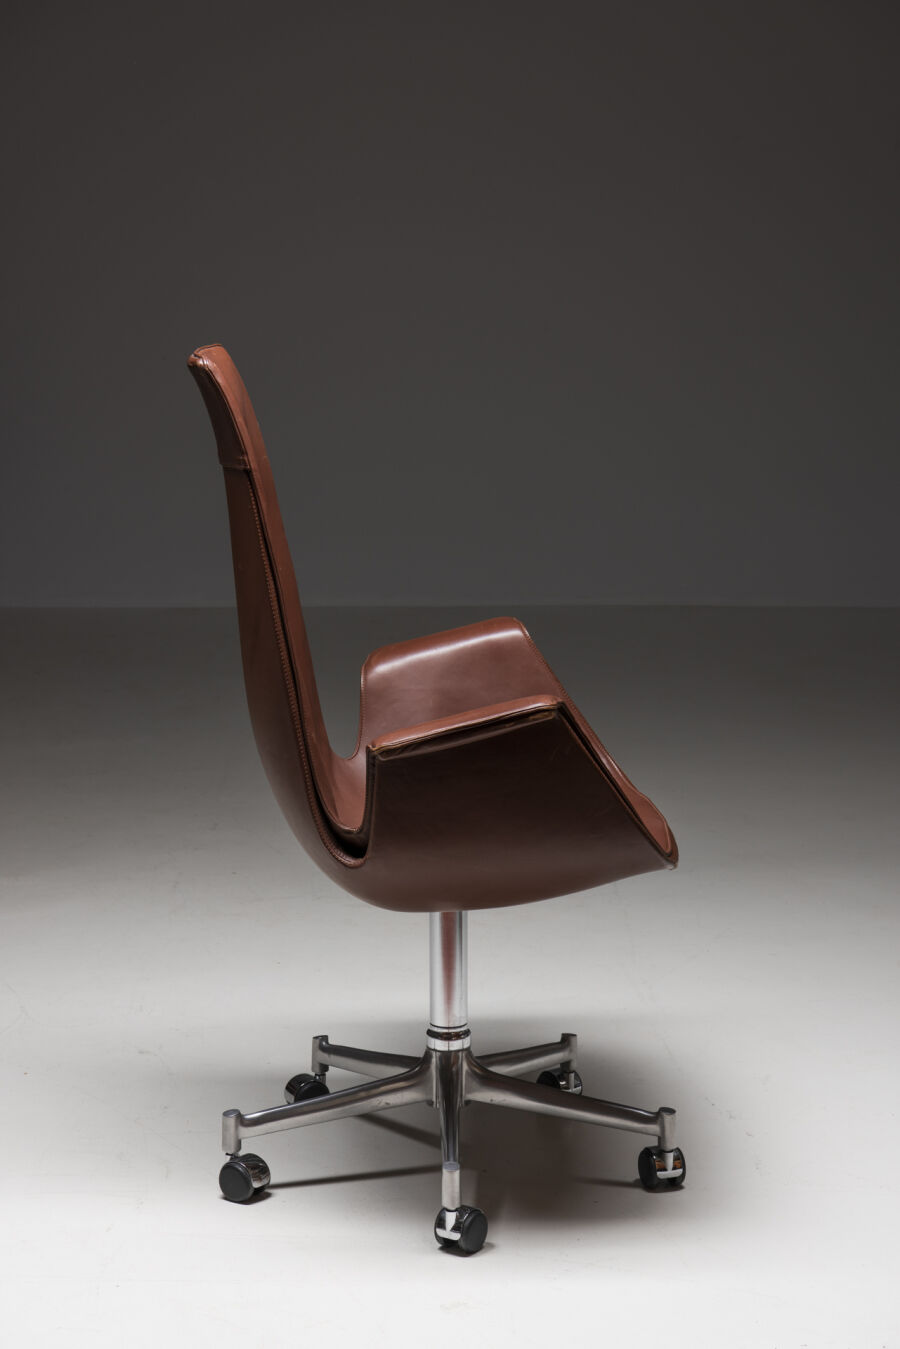 3036fabricius-kastholmdesk-chair-brown-leather-1